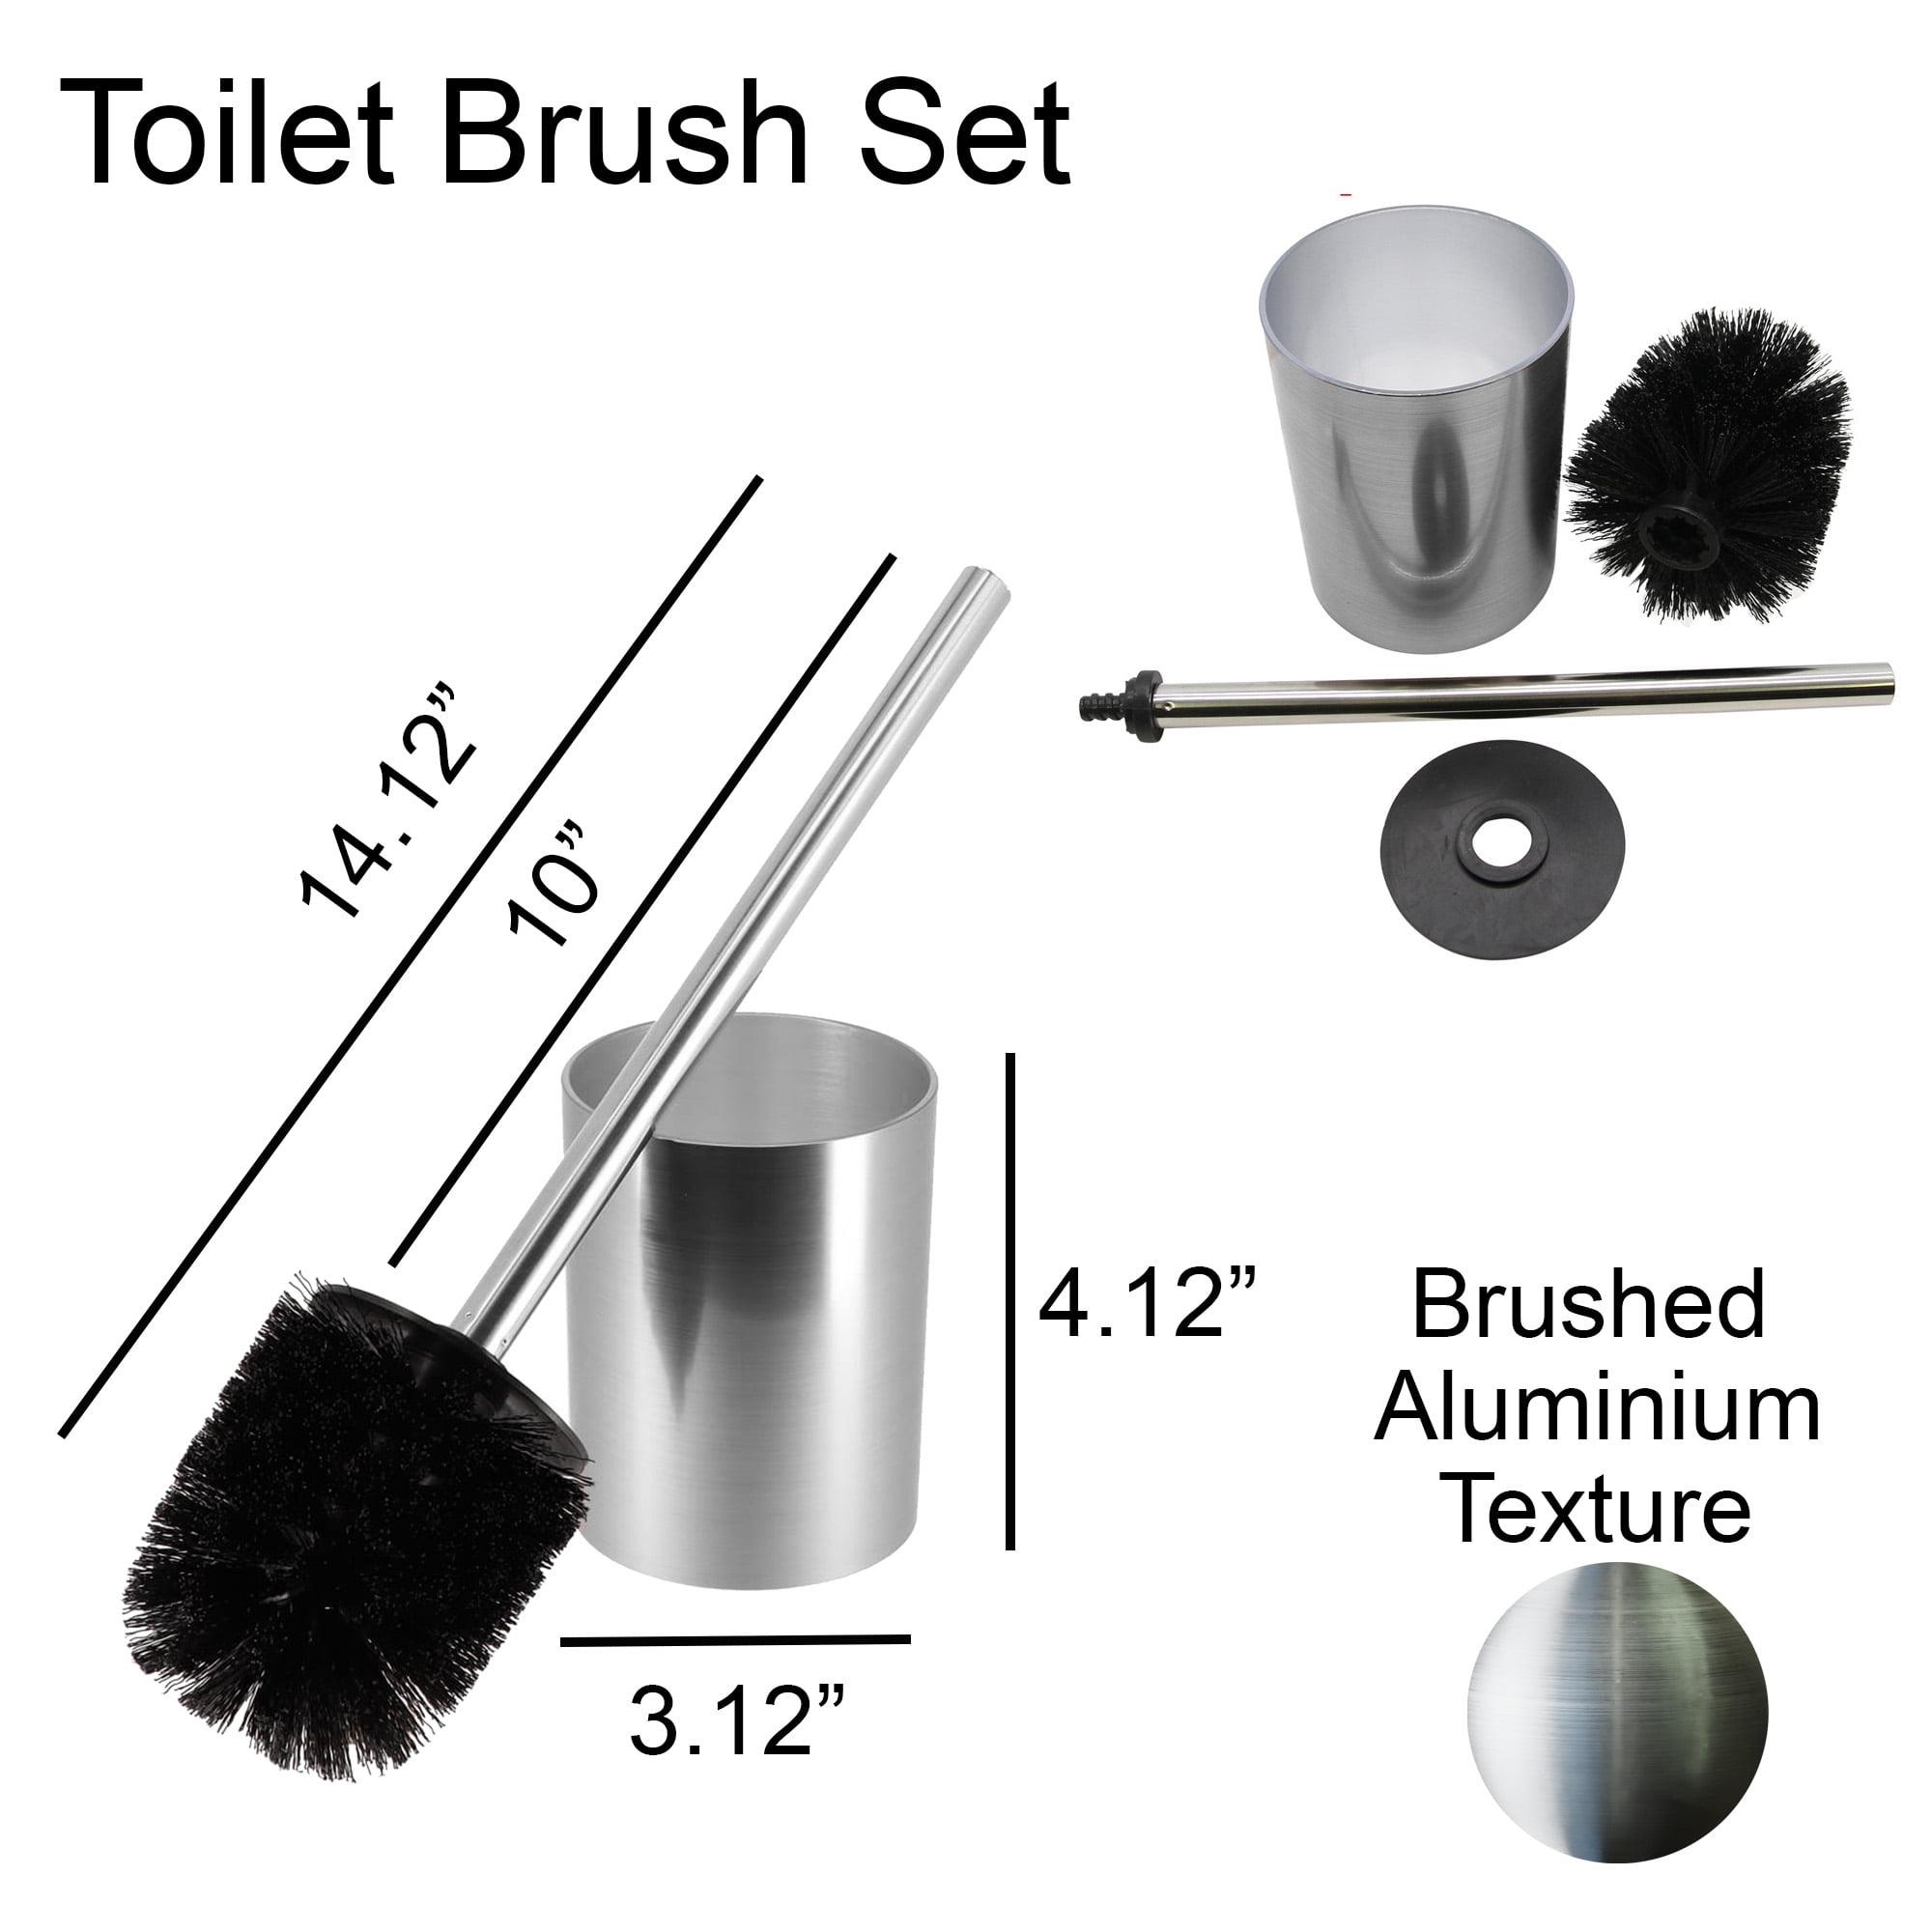 Brushed Aluminum Bathroom Accessory Set 5-Pieces Noumea